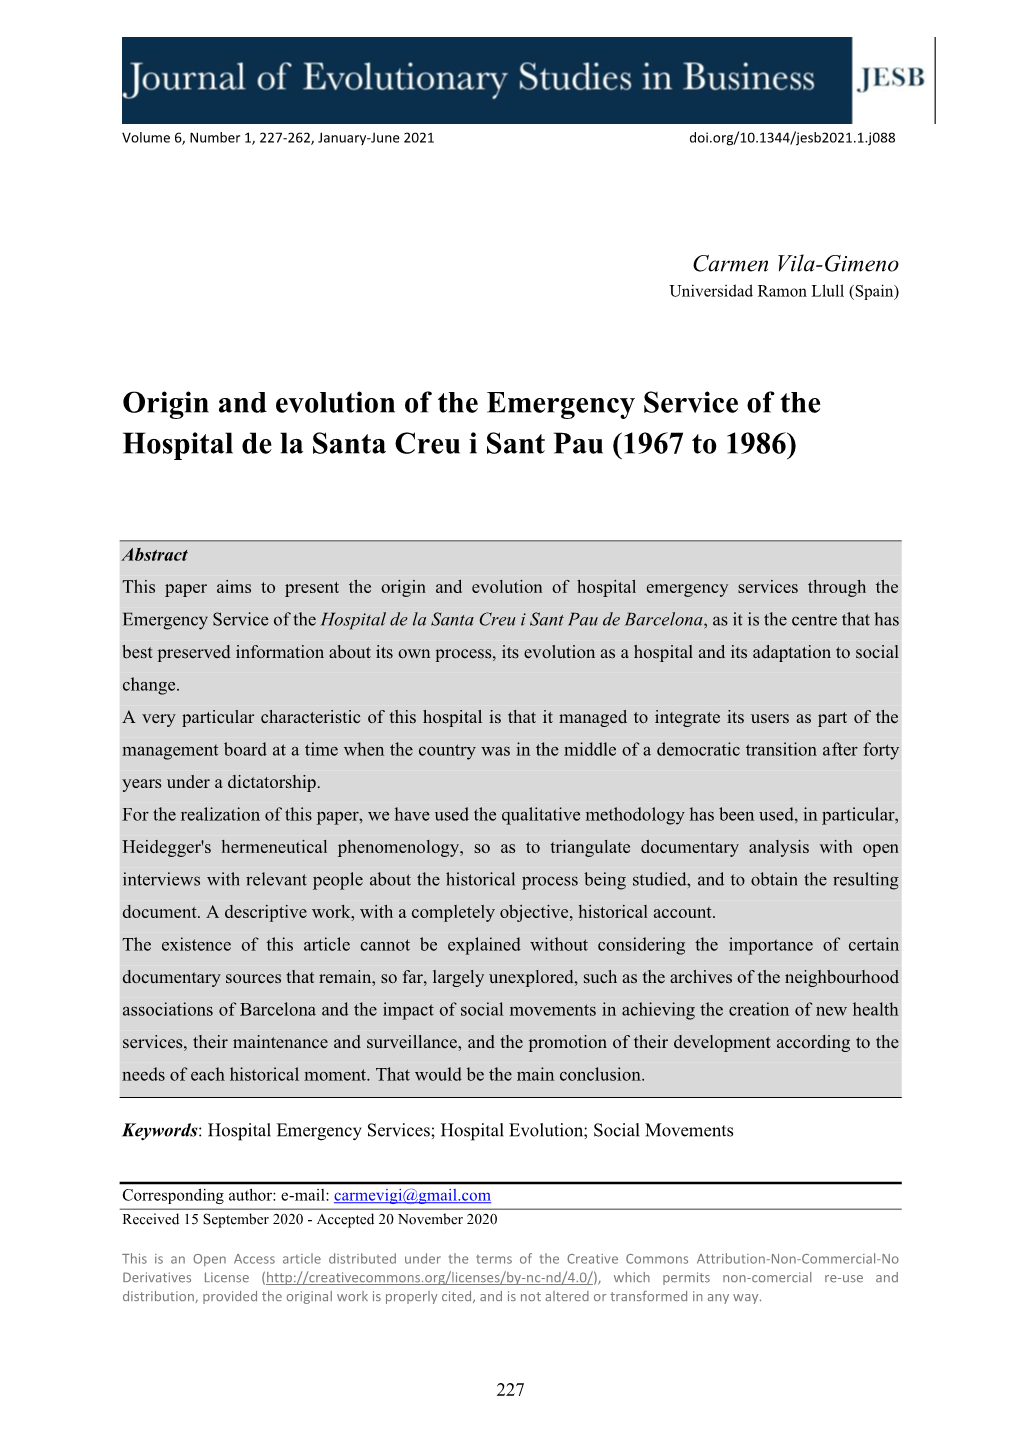 Origin and Evolution of the Emergency Service of the Hospital De La Santa Creu I Sant Pau (1967 to 1986)